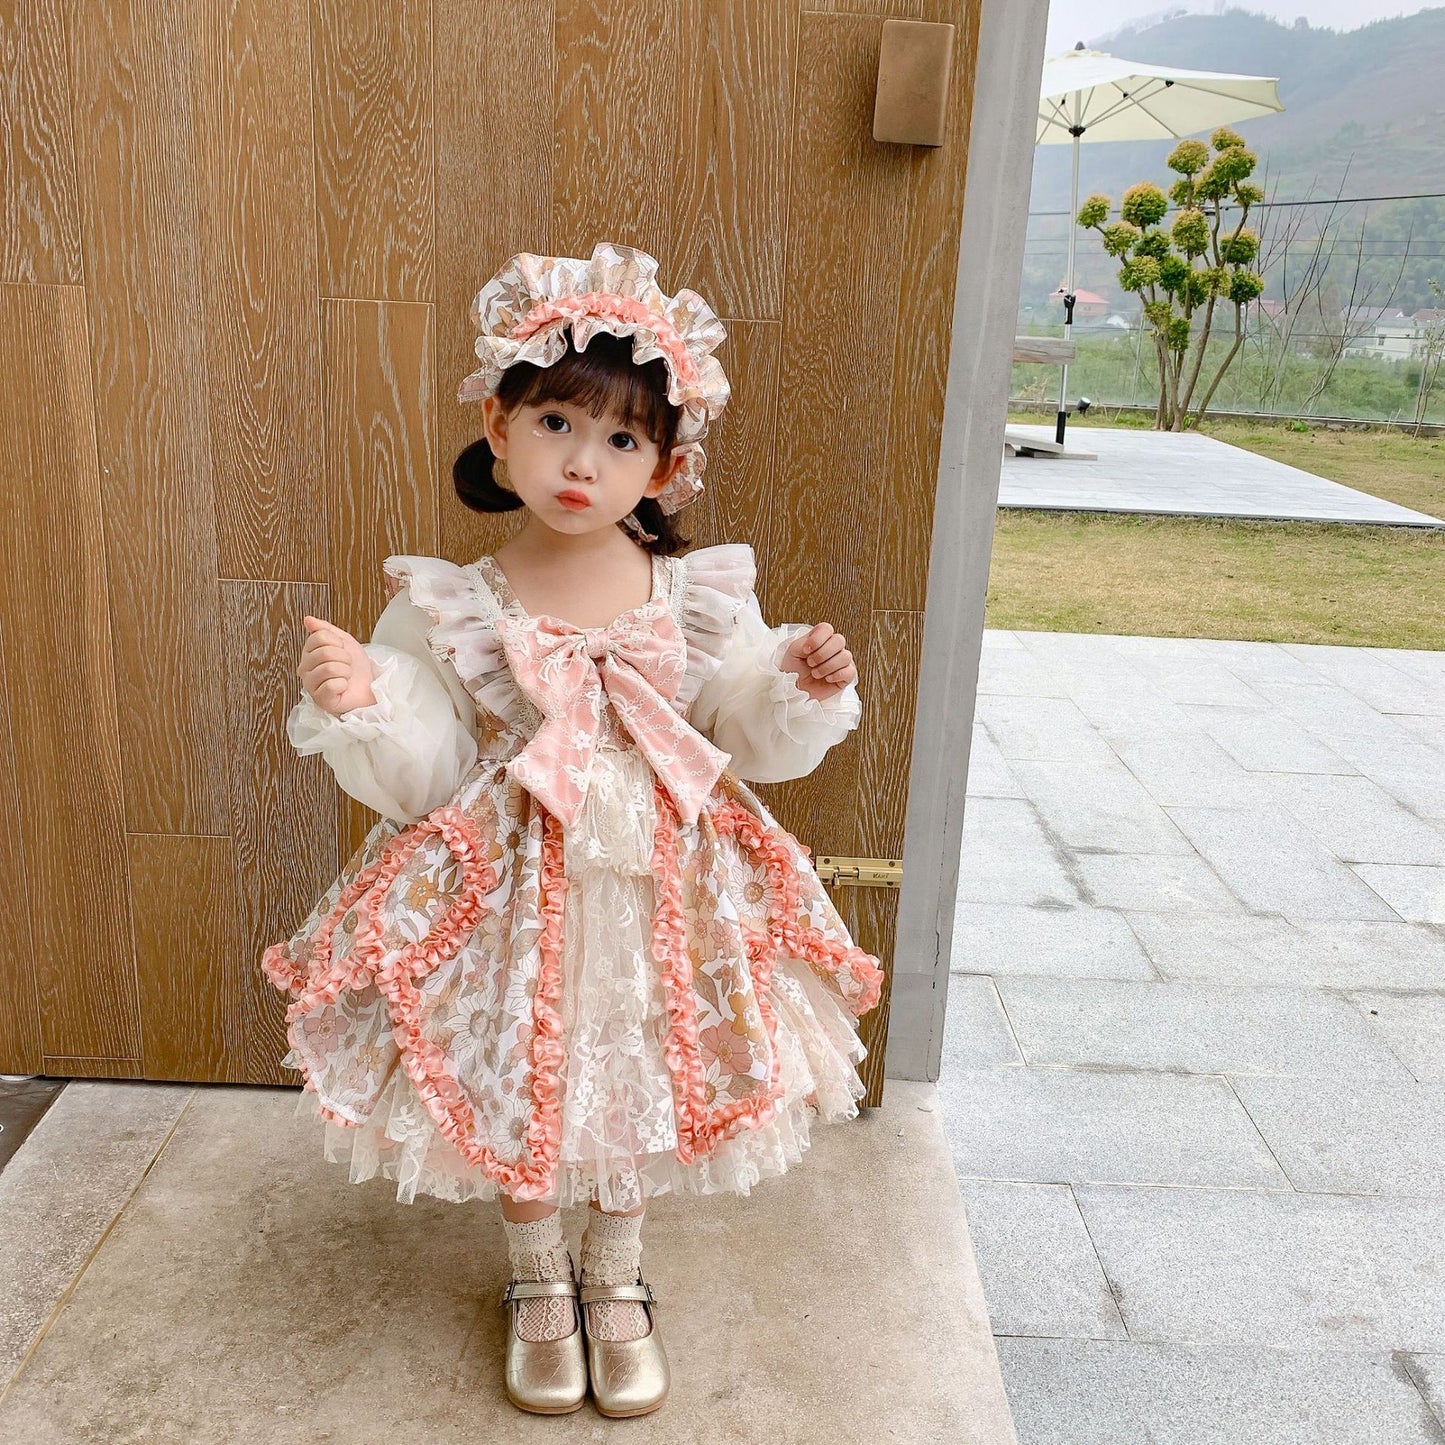 Falling For Autumn: Spanish Lolita style Fall dress for toddler girls